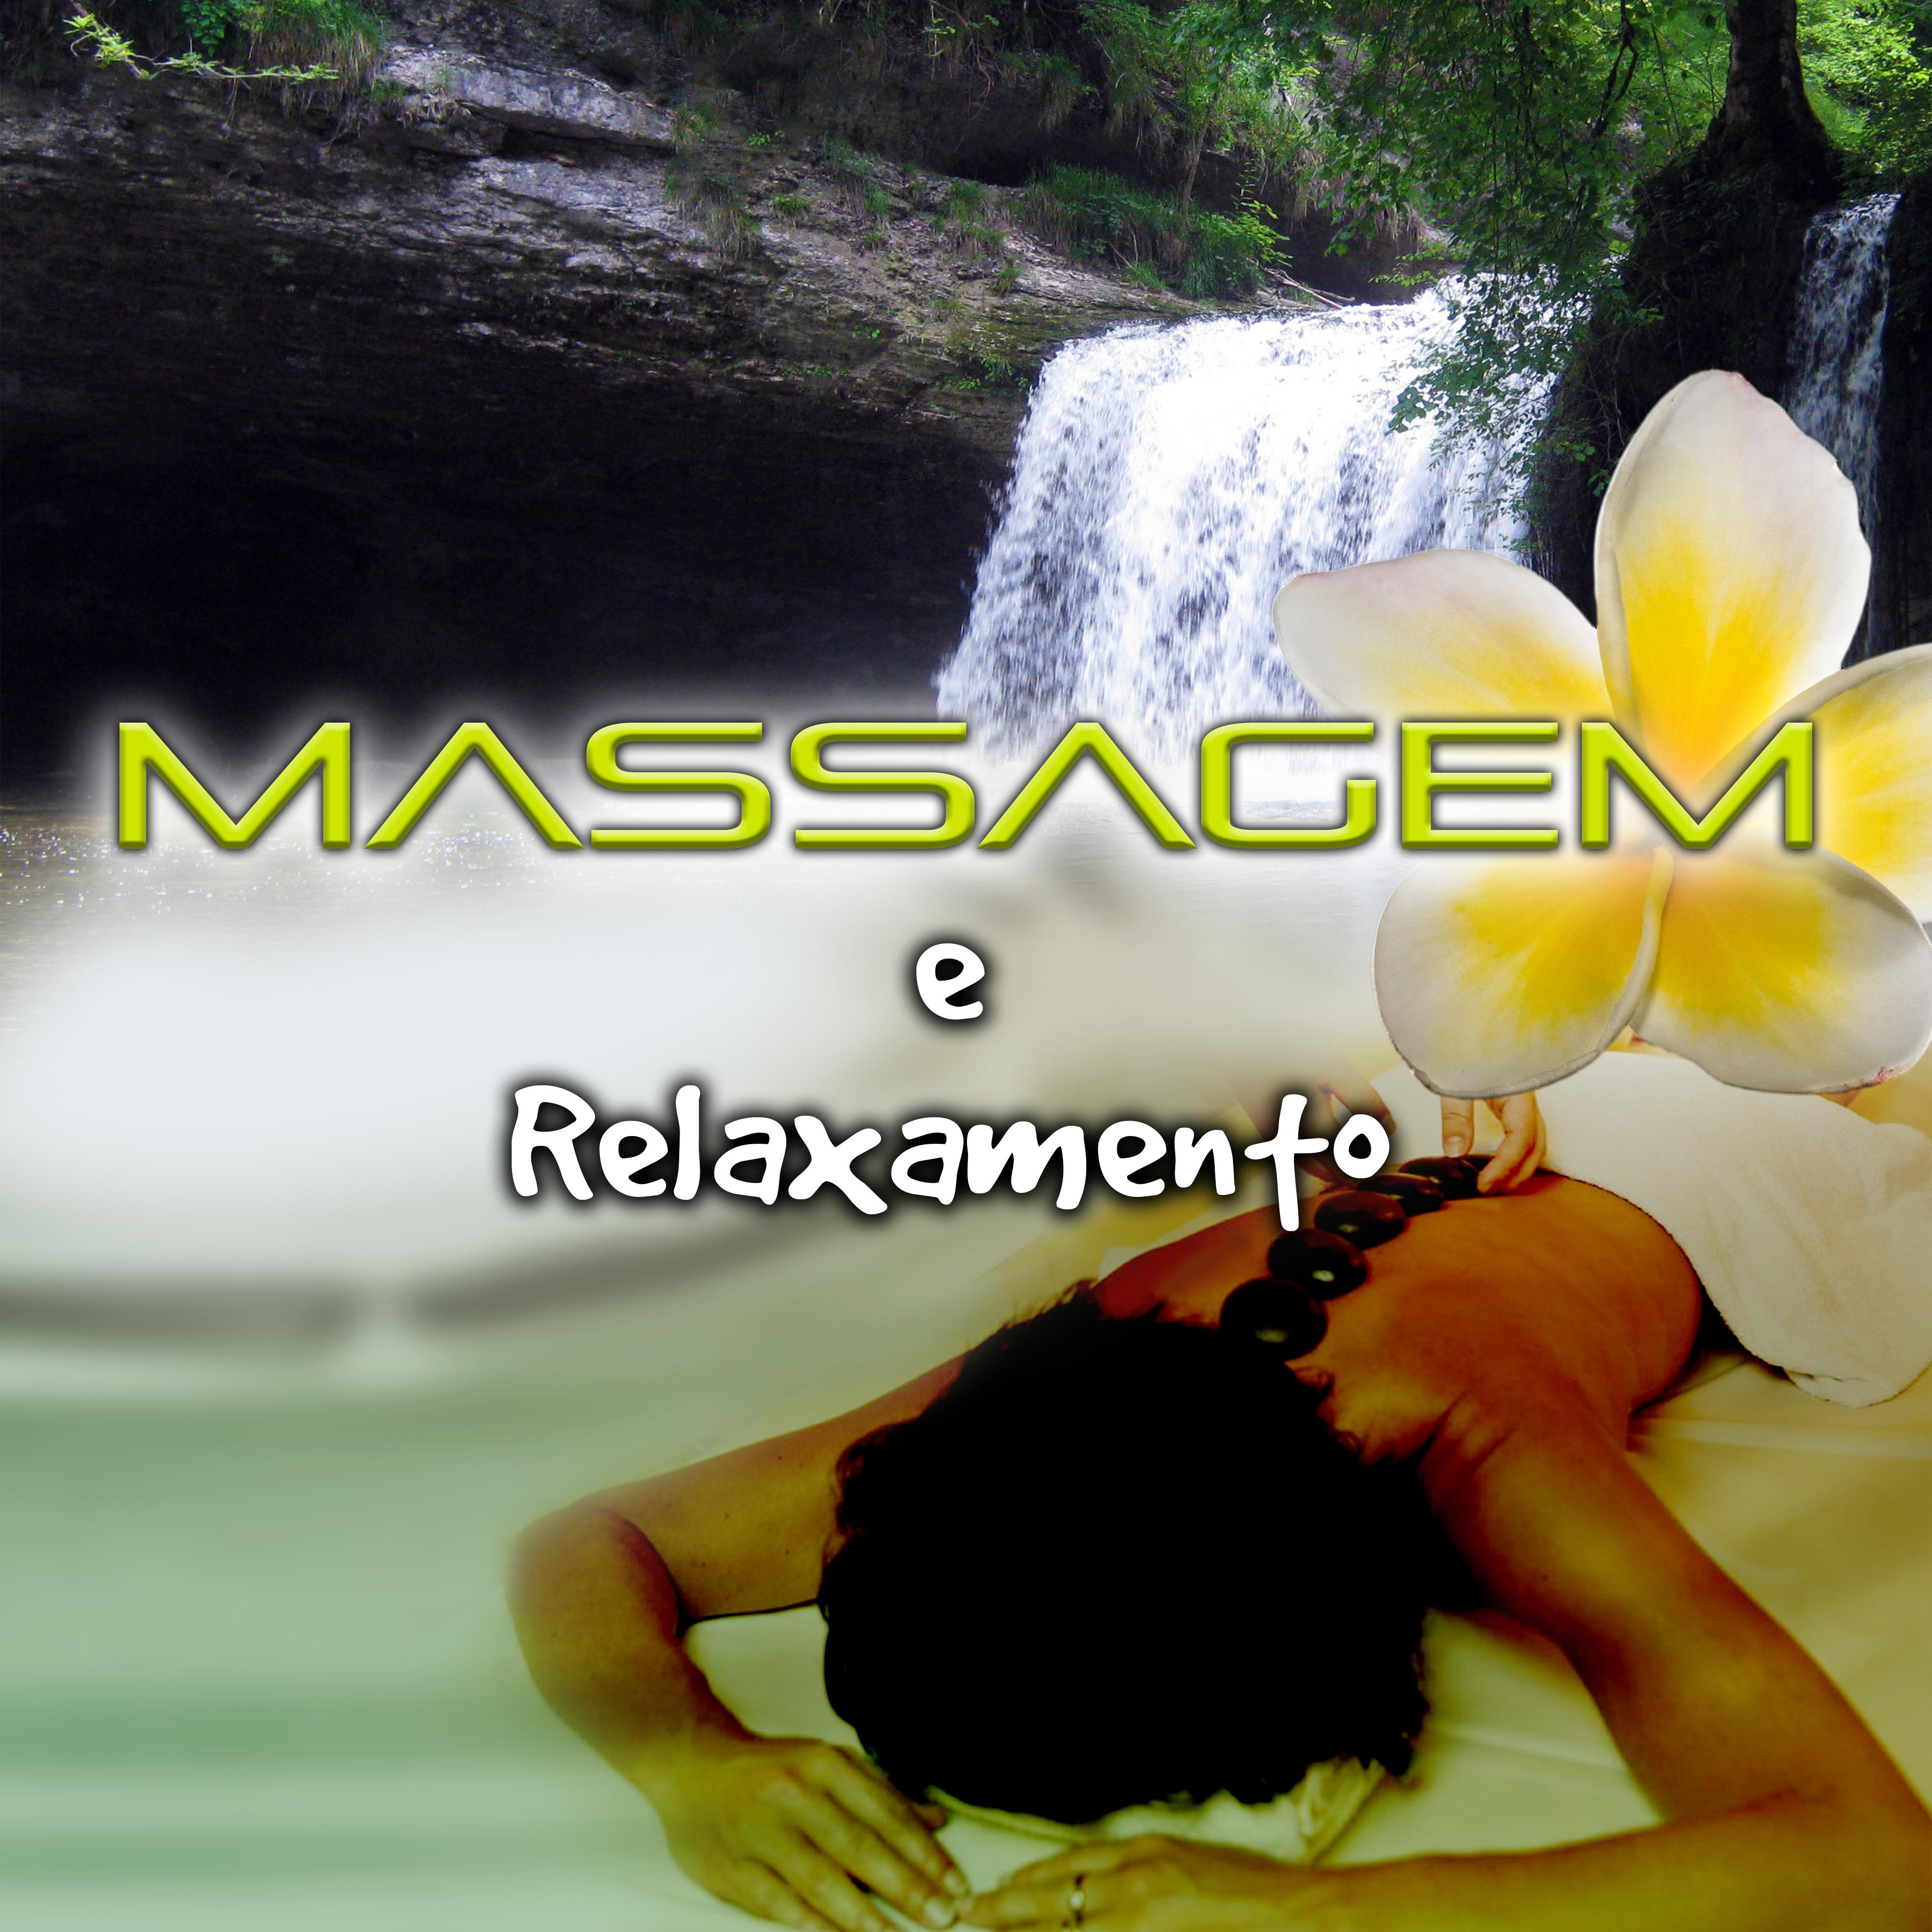 Massagem e Relaxamento  Mu sica para Spa e BemEstar, Medita o, Serenidade, Yoga, Relaxamento, Sons da Natureza, o Sono, Can o de Ninar